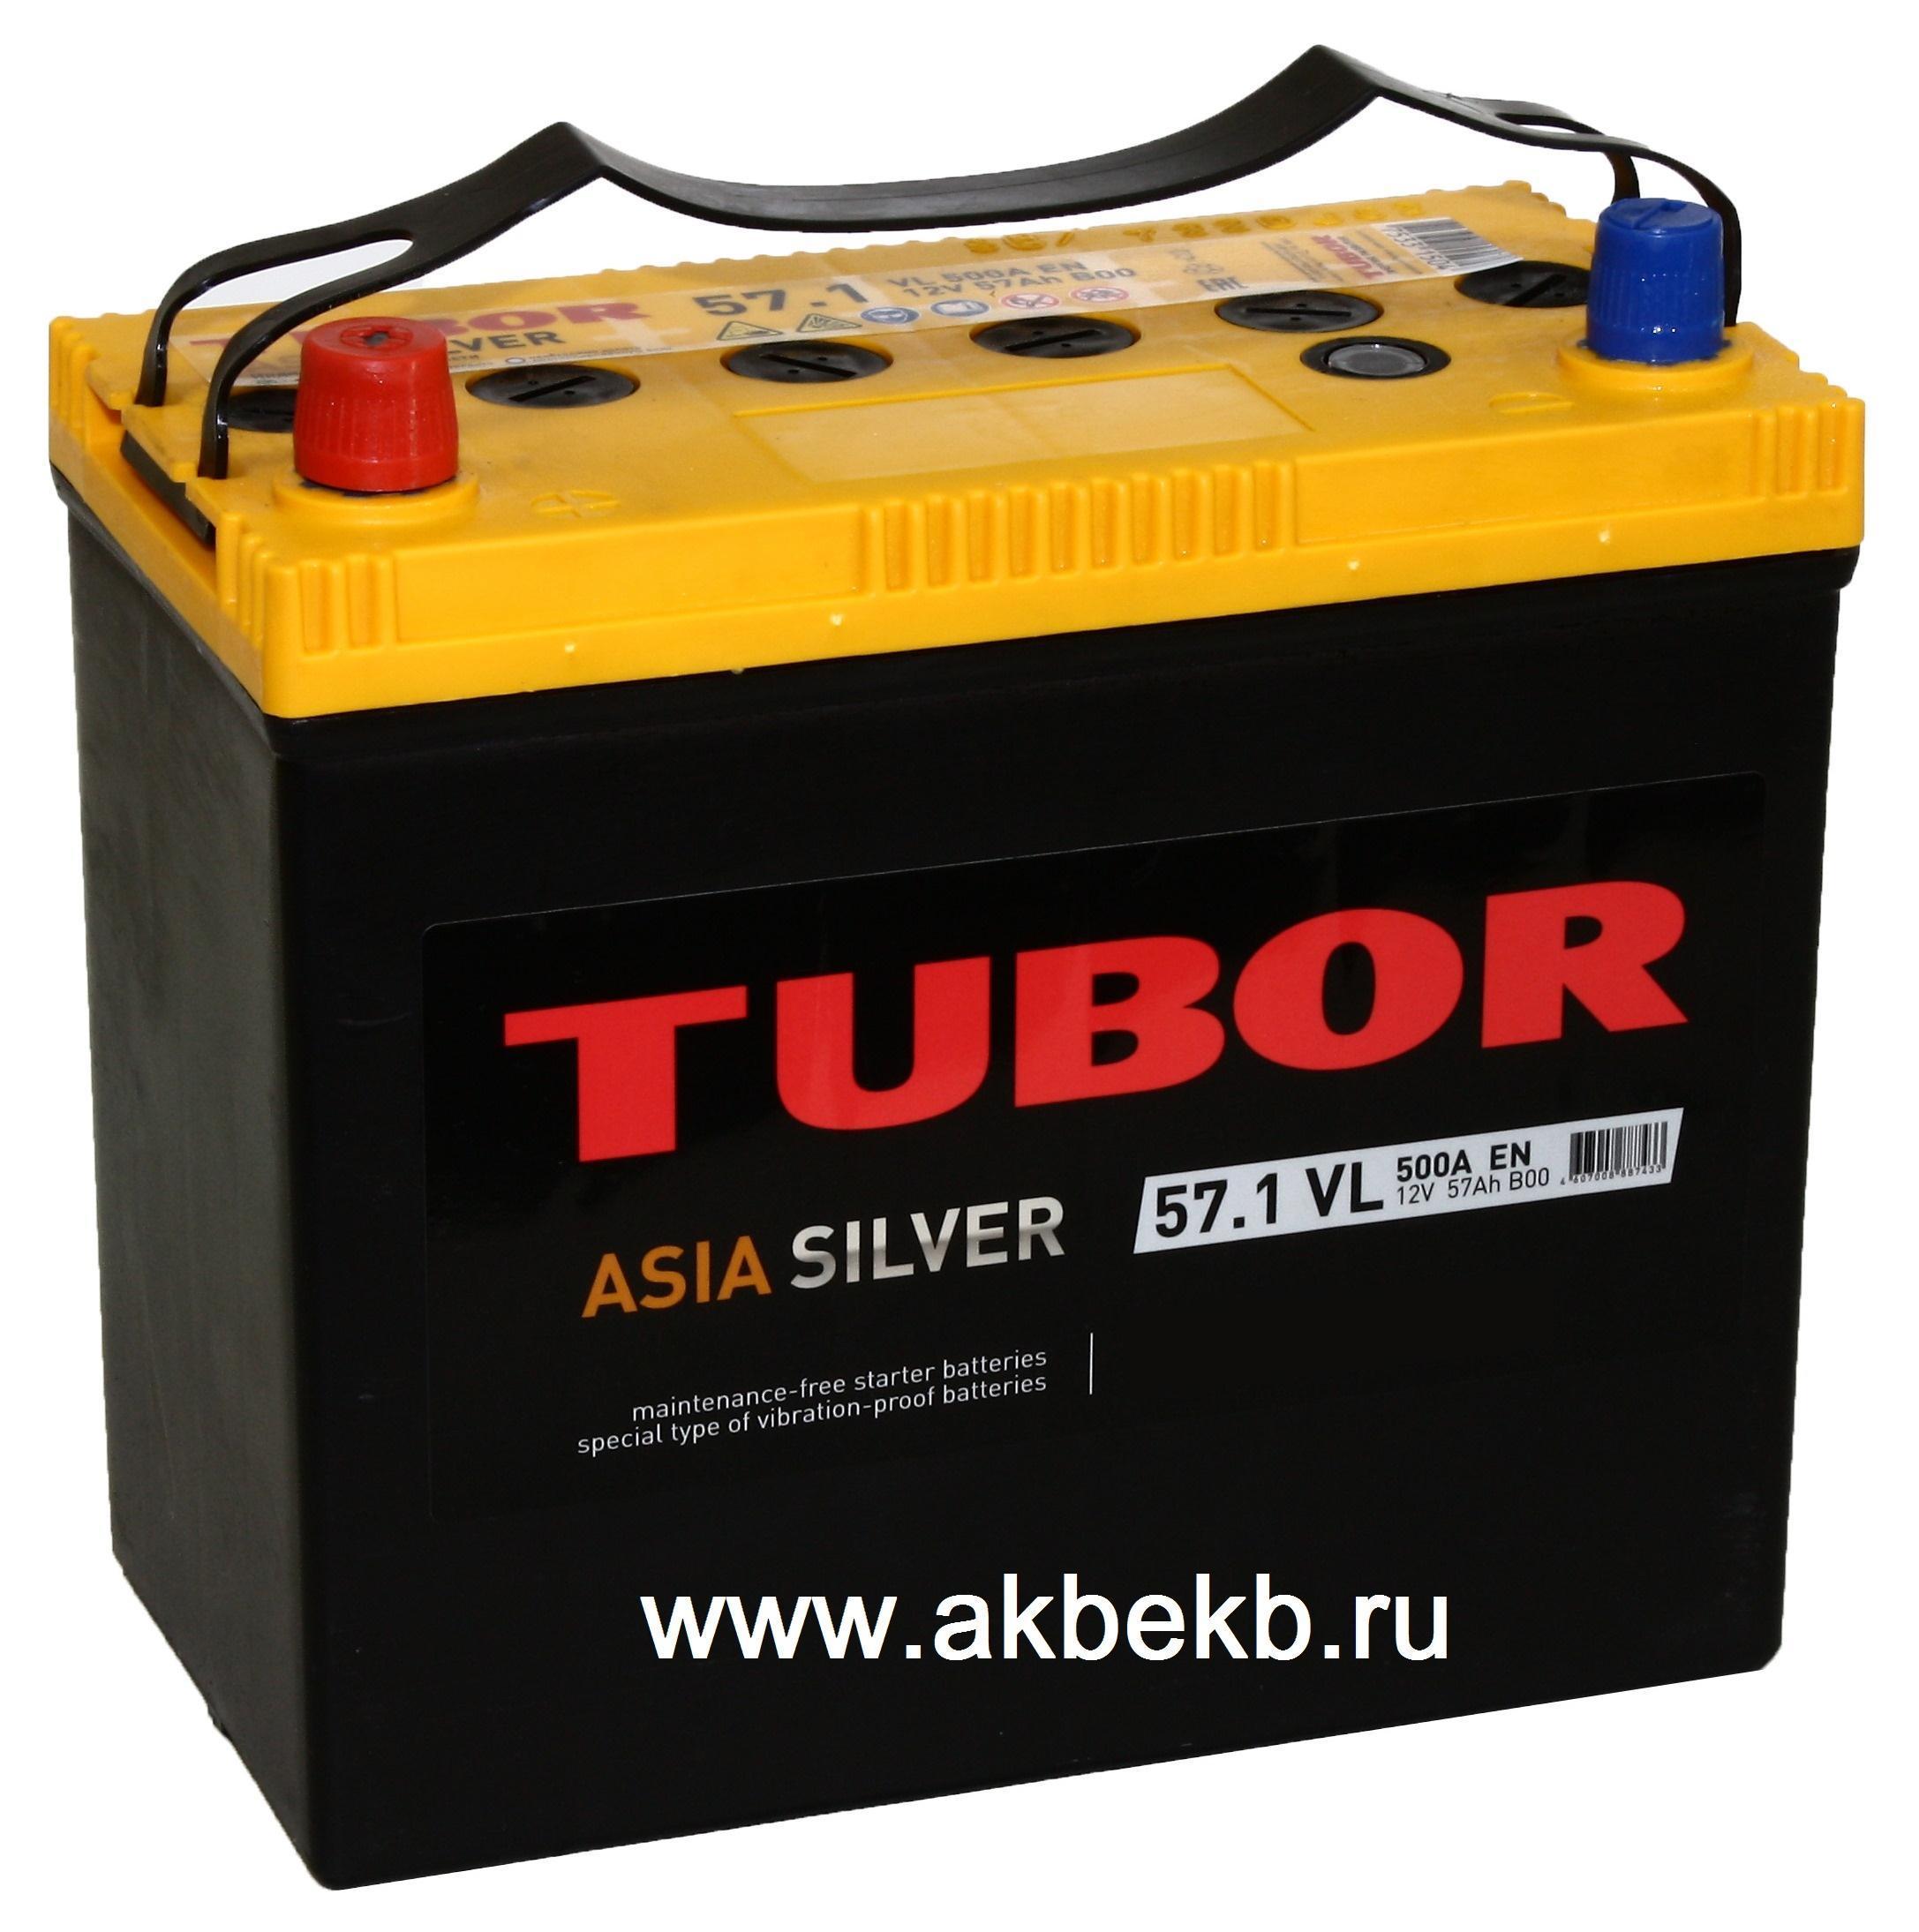 Tubor Asia Silver 6ст-70.0 VL b01. Аккумулятор Tubor Asia Silver 6ст-77.1 VL b01. Аккумулятор Tubor ASIASILVER 6ст-57.0 VL b00. Аккумулятор TURBOMAX Asia Silver. Tubor asia